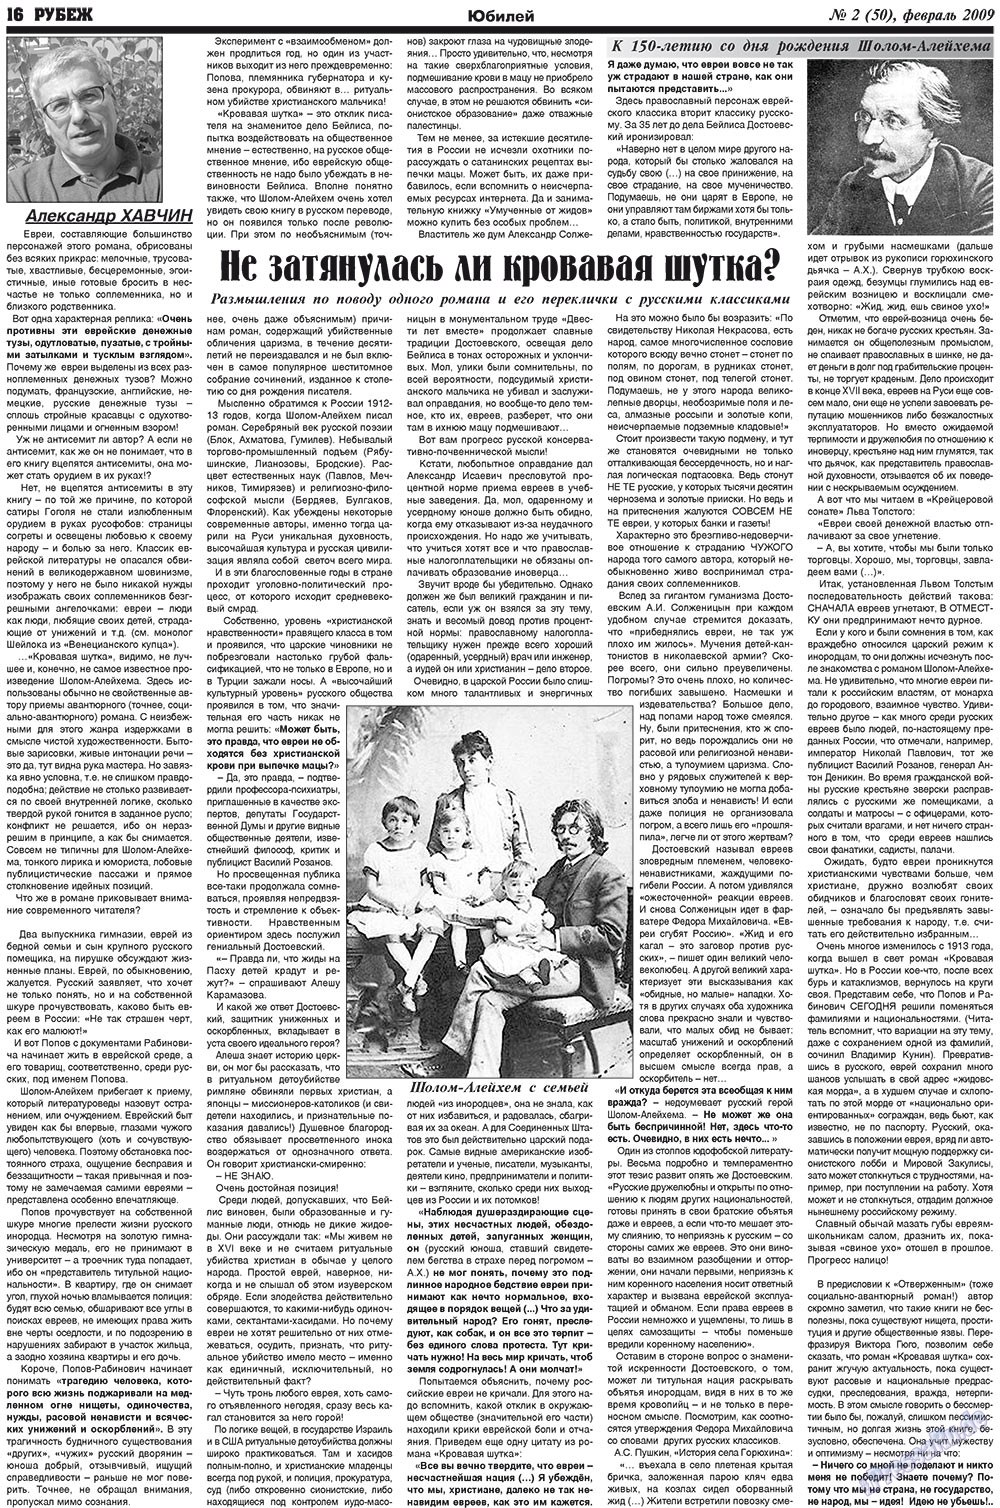 Рубеж, газета. 2009 №2 стр.16